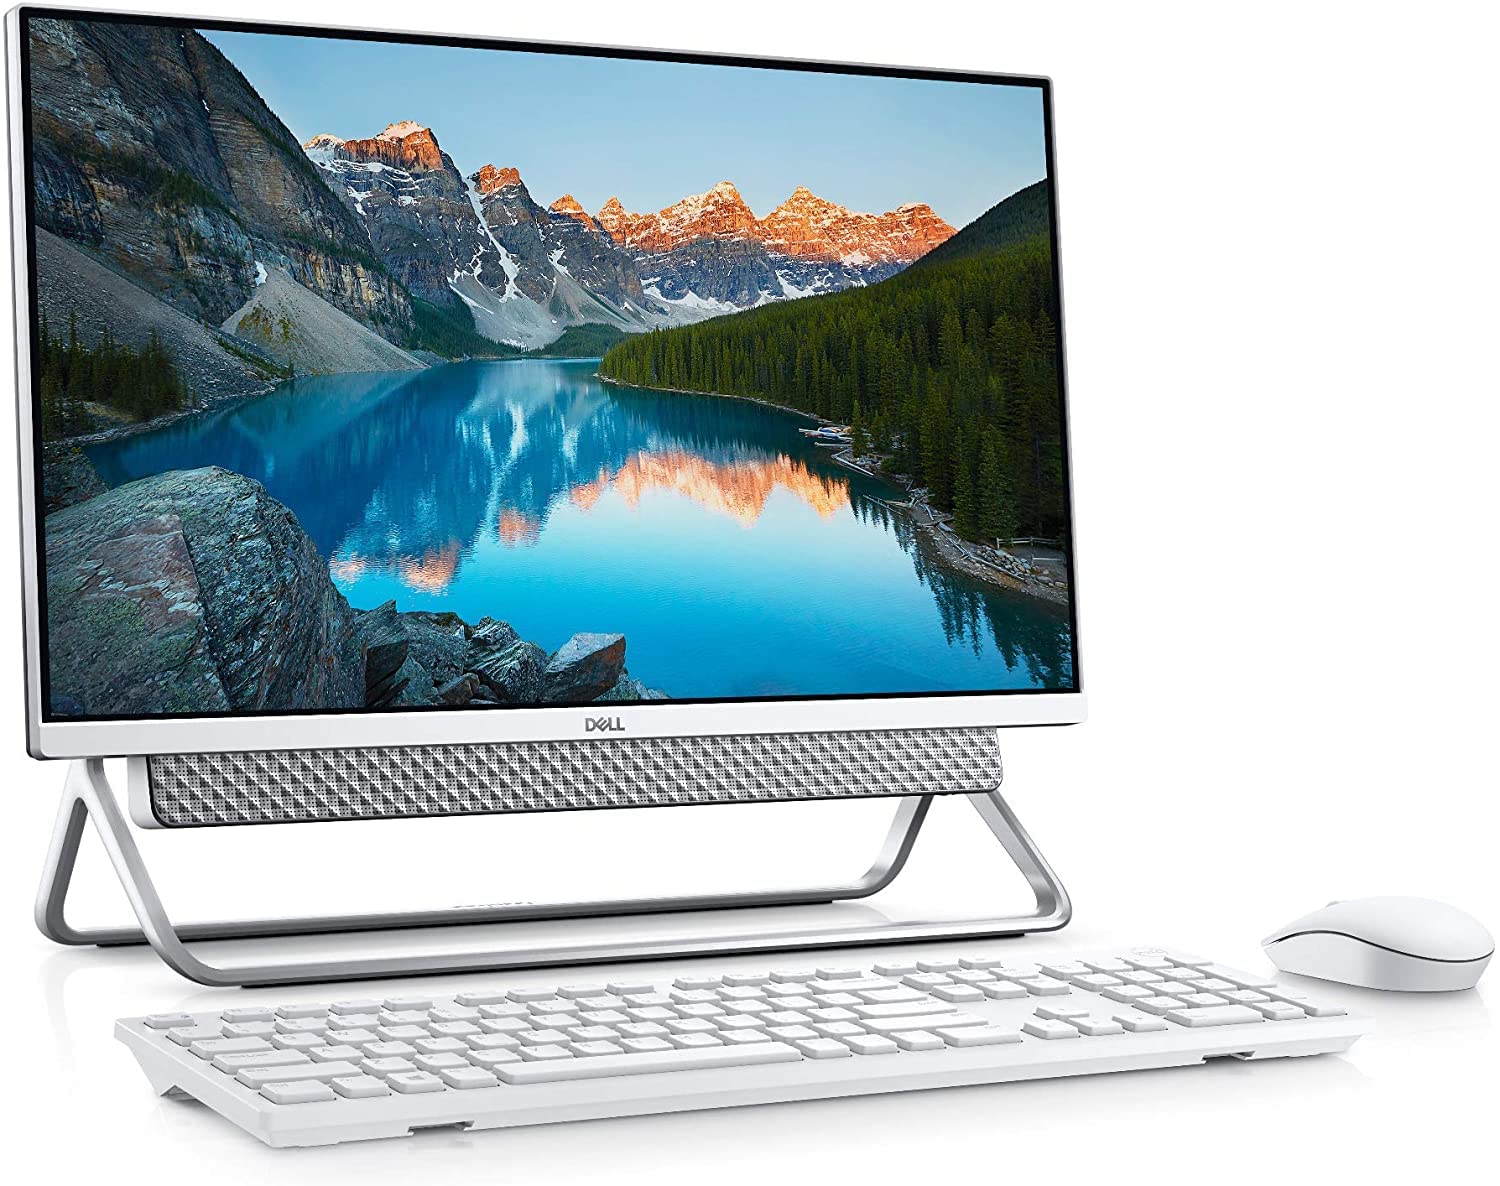 Dell Inspiron 24 All-in-One Desktop, 23.8" Full HD Touchscreen, 11th Gen Intel i5-1135G7, 32GB RAM 1TB SSD+1TB HDD, Windows 10 Home